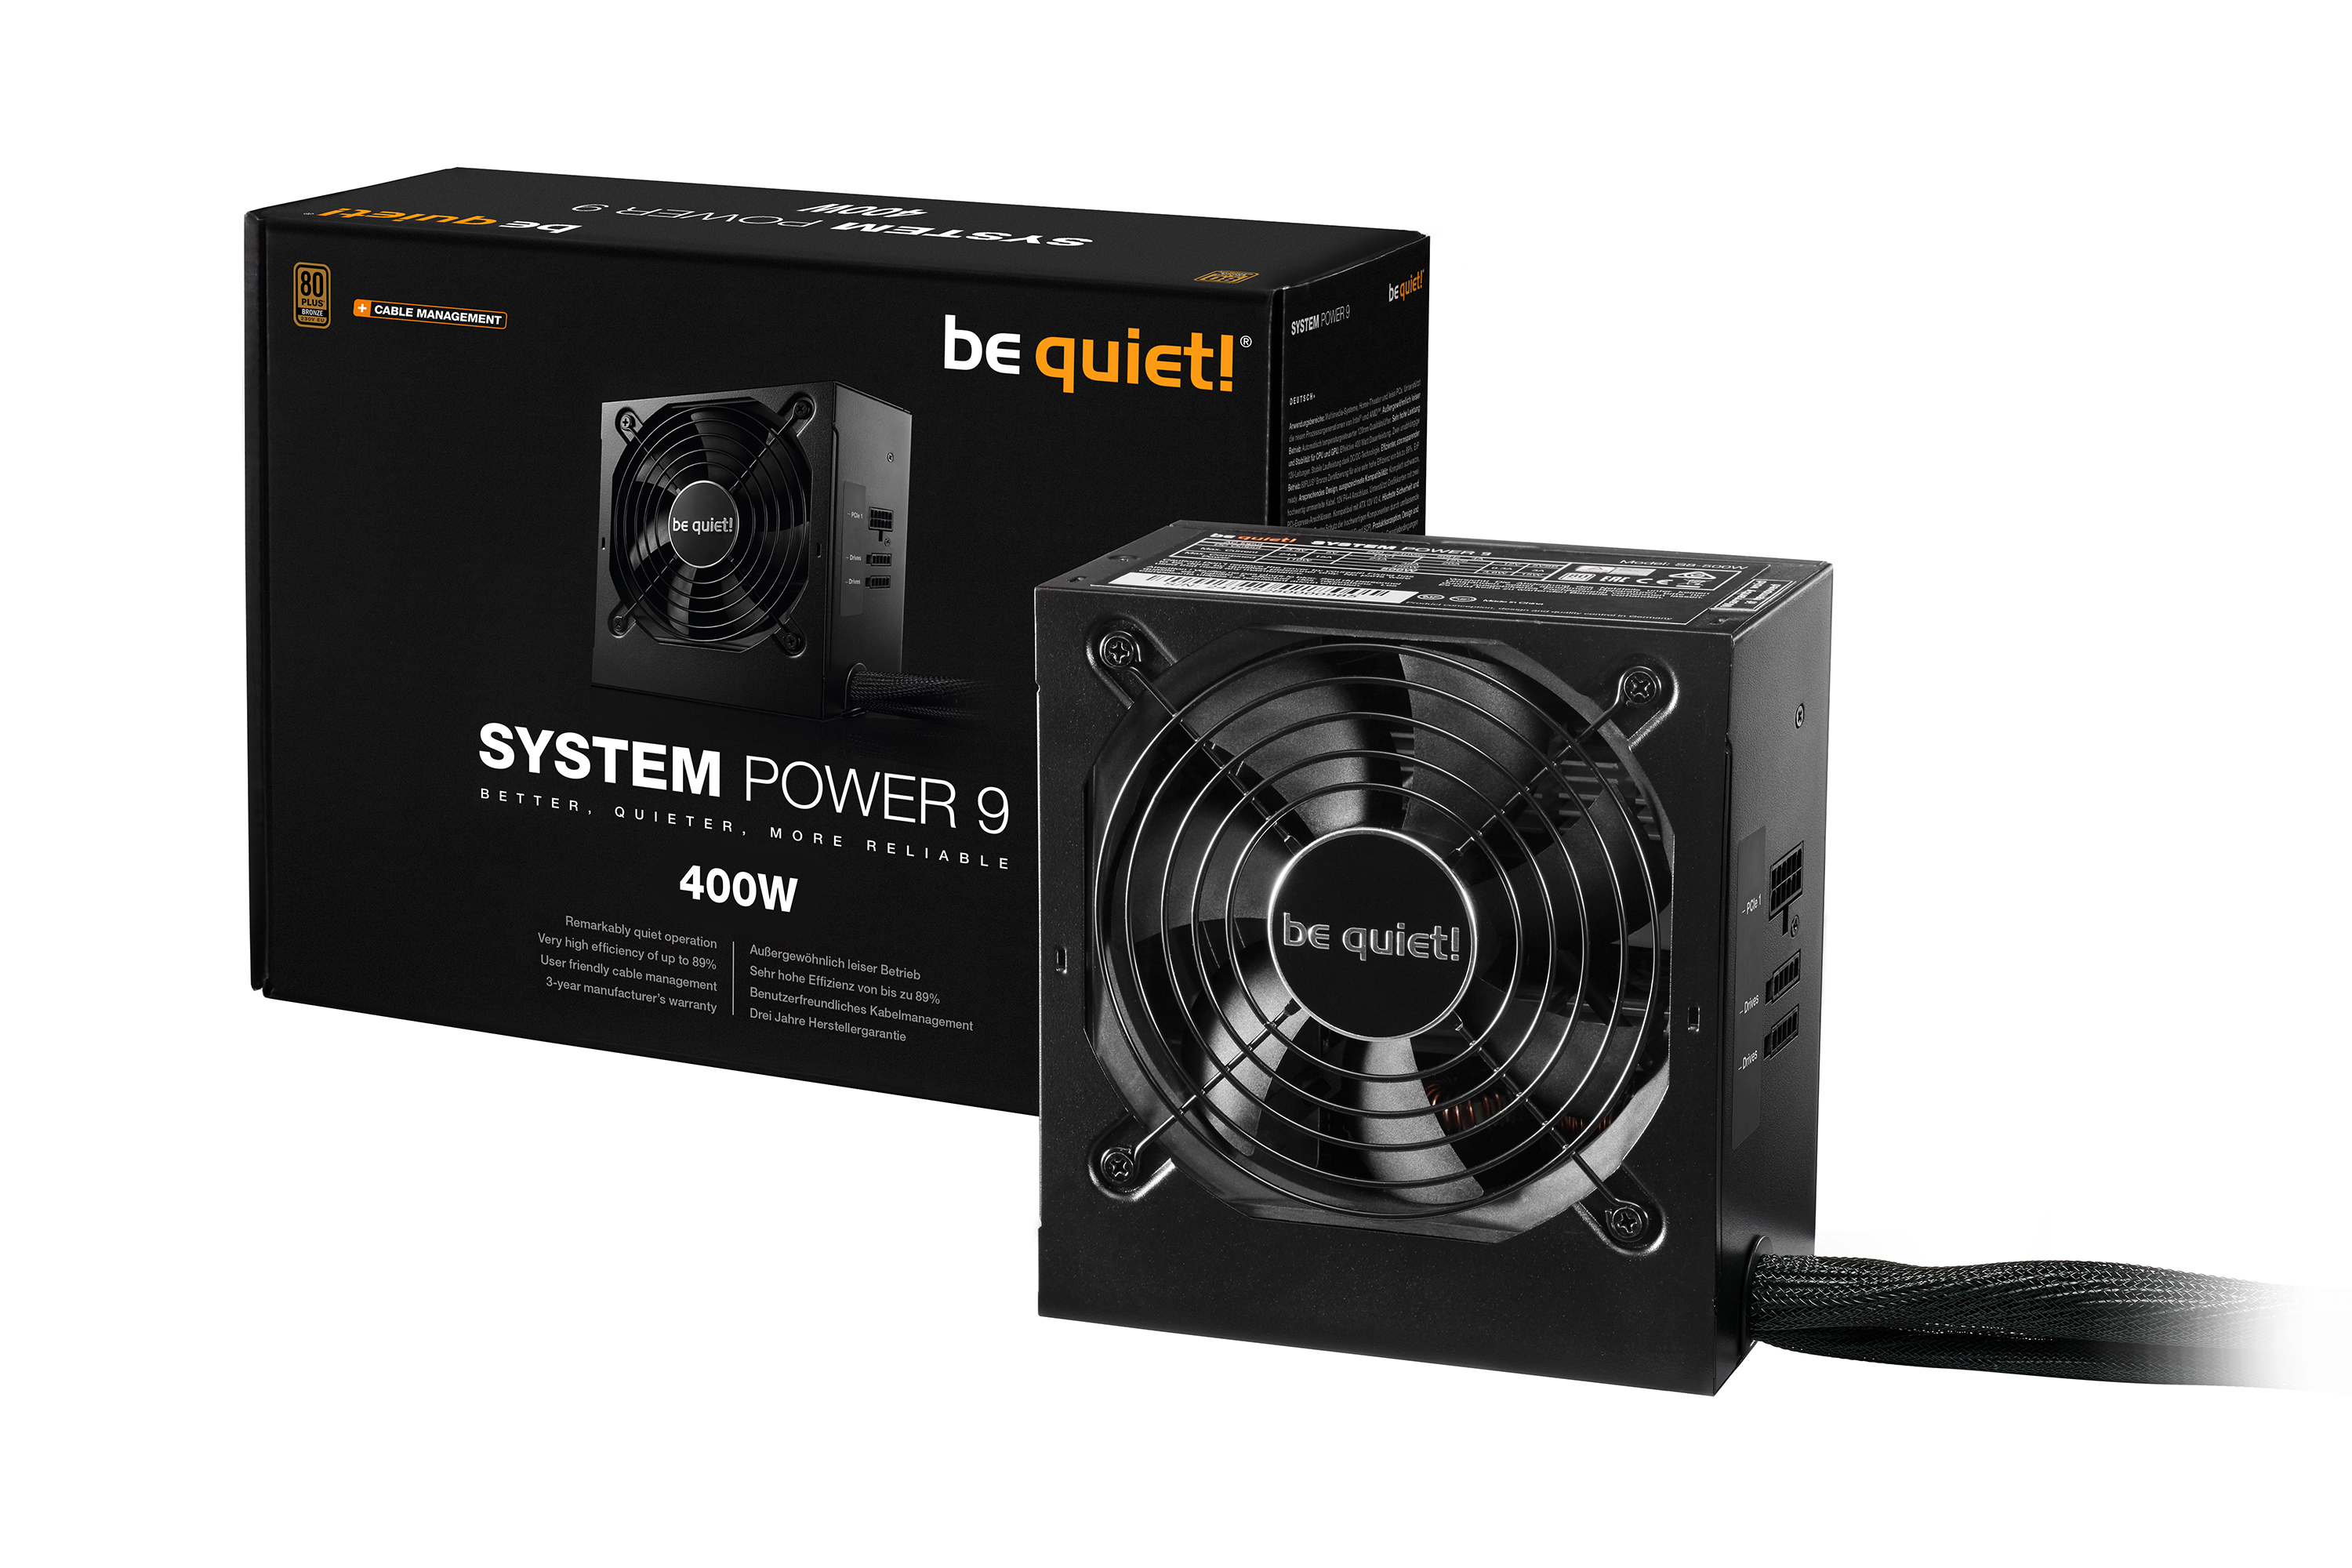 be quiet! SYSTEM POWER 9 - 400W (Semi modular)